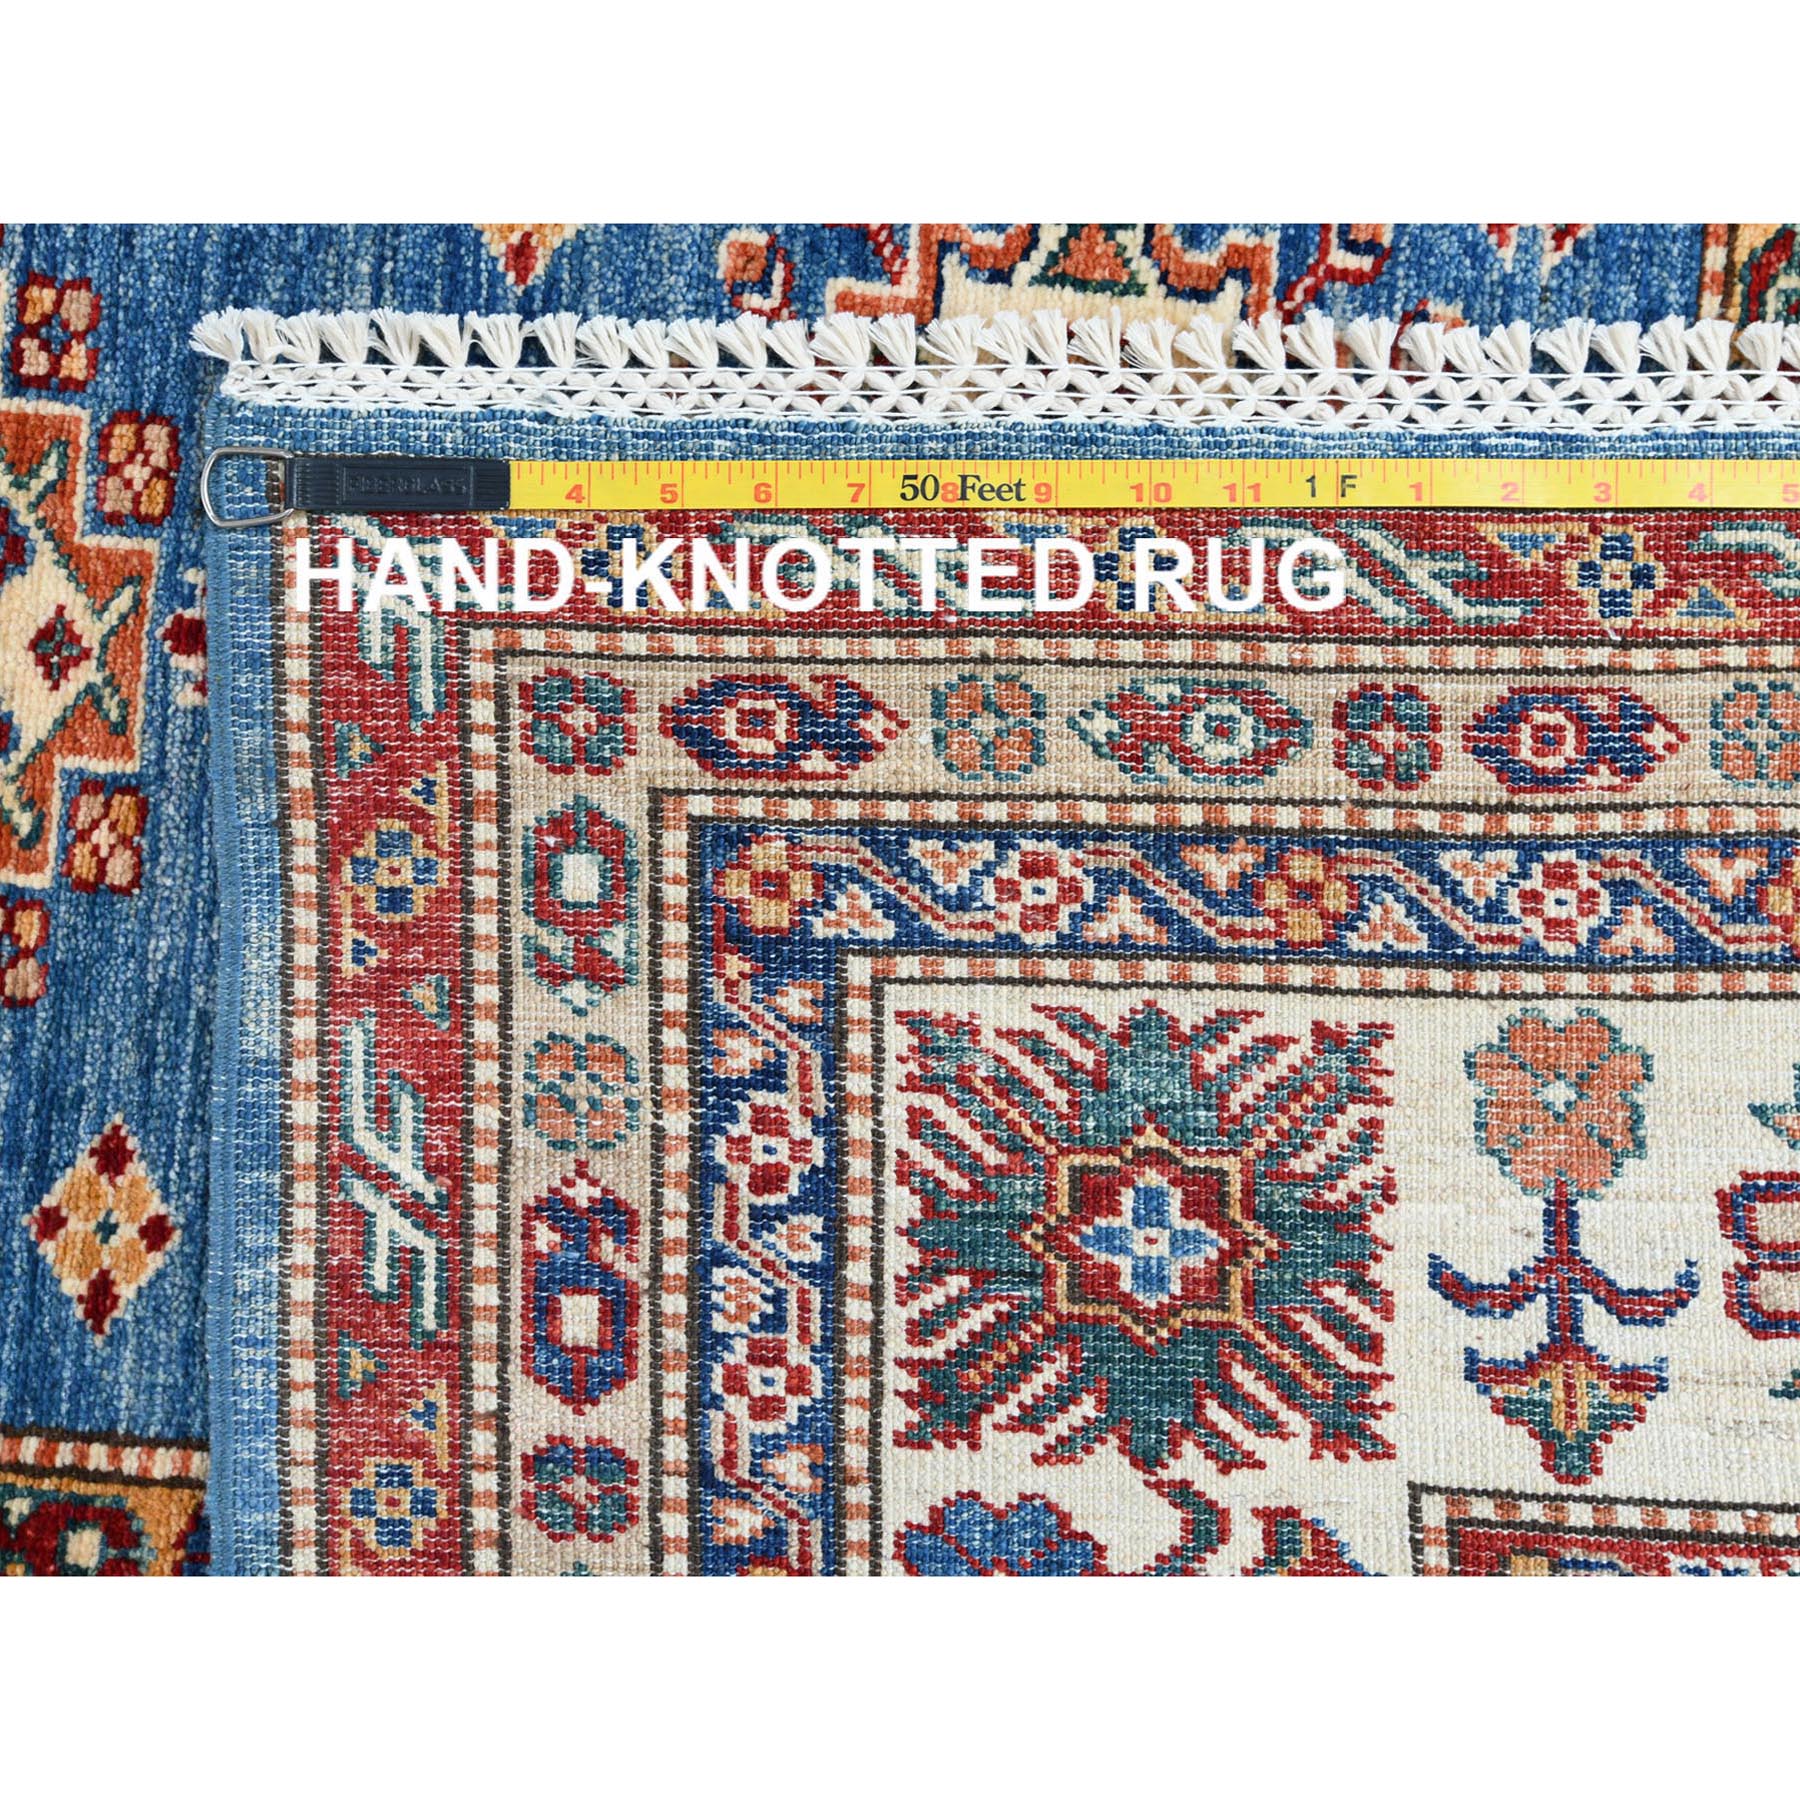 9'2"x12'3" Soft Natural Wool Denim Blue Super Kazak Tribal Design Hand Woven Oriental Rug 